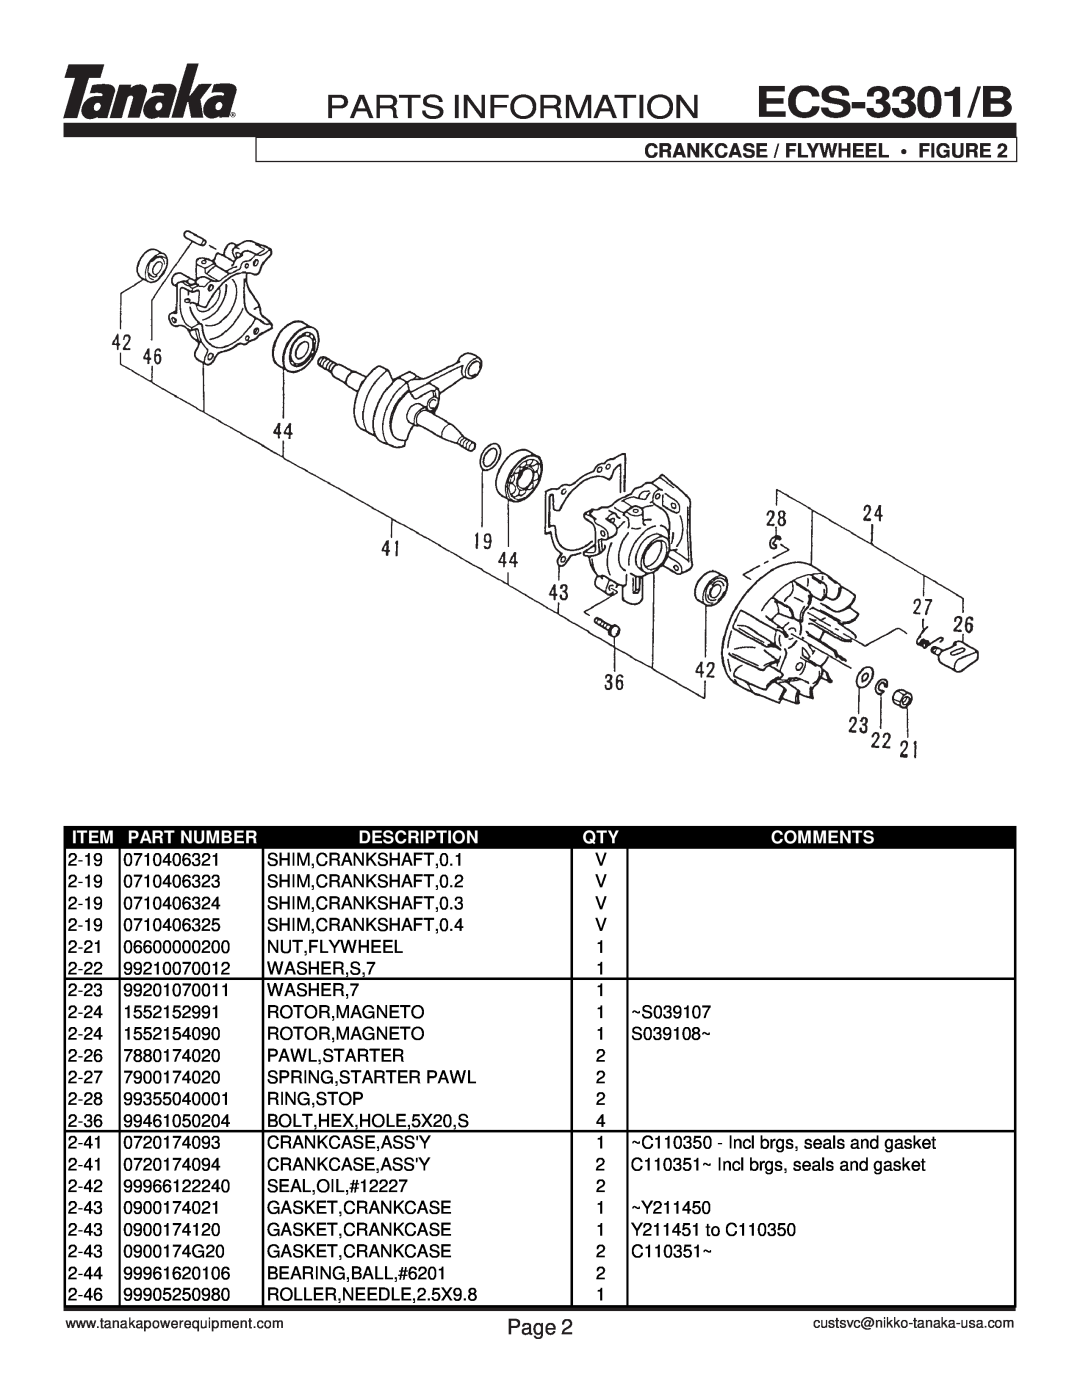 Tanaka manual Crankcase / Flywheel Figure, PARTS INFORMATION ECS-3301/B, Page, Part Number, Description, Comments 